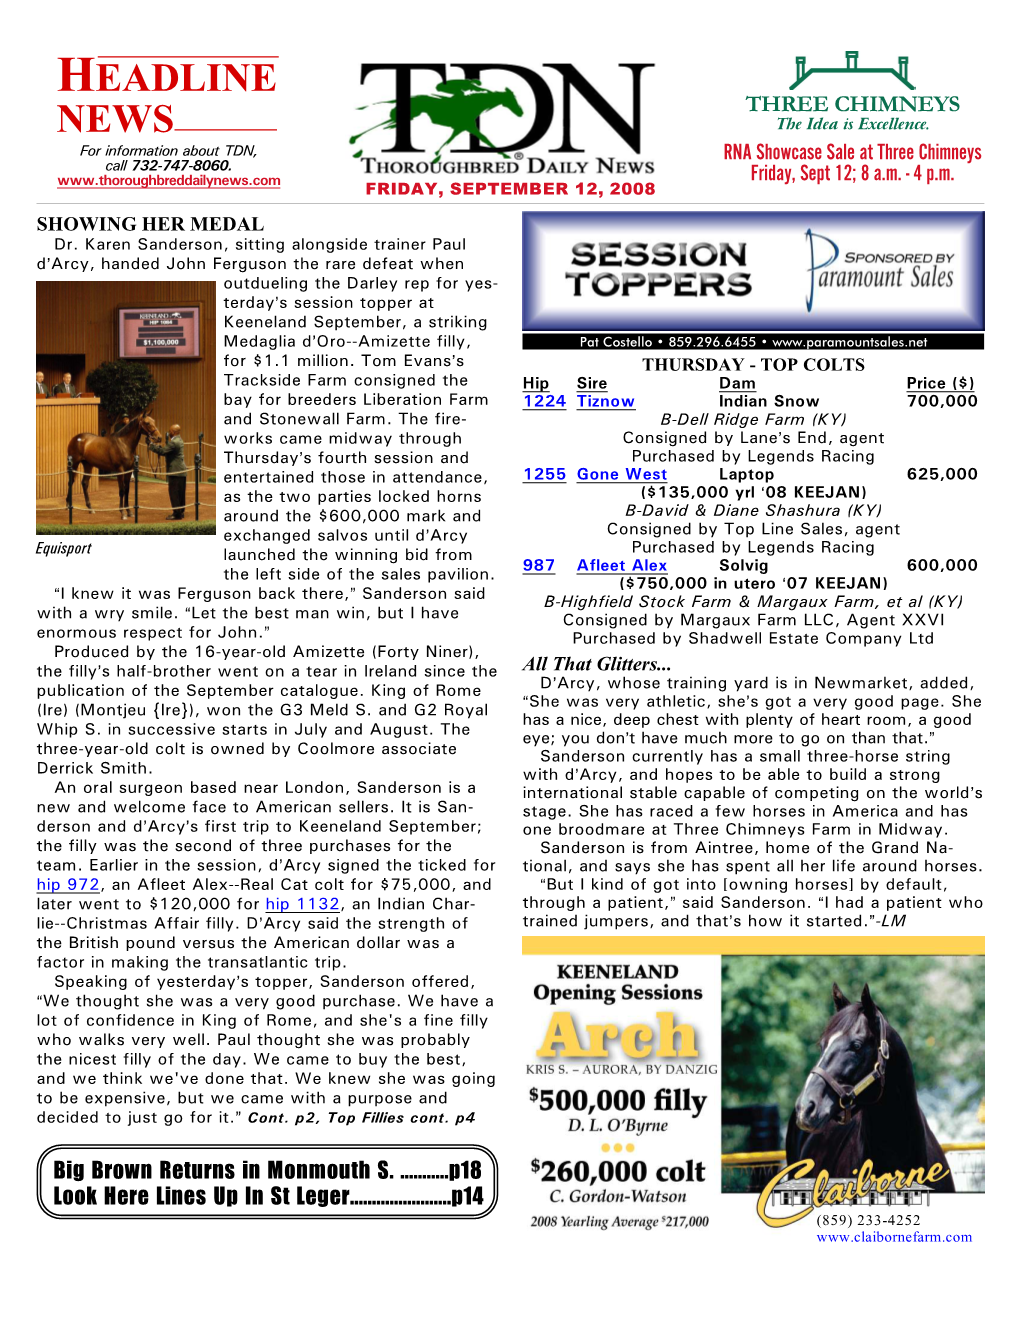 HEADLINE NEWS • 9/12/08 • PAGE 2 of 20